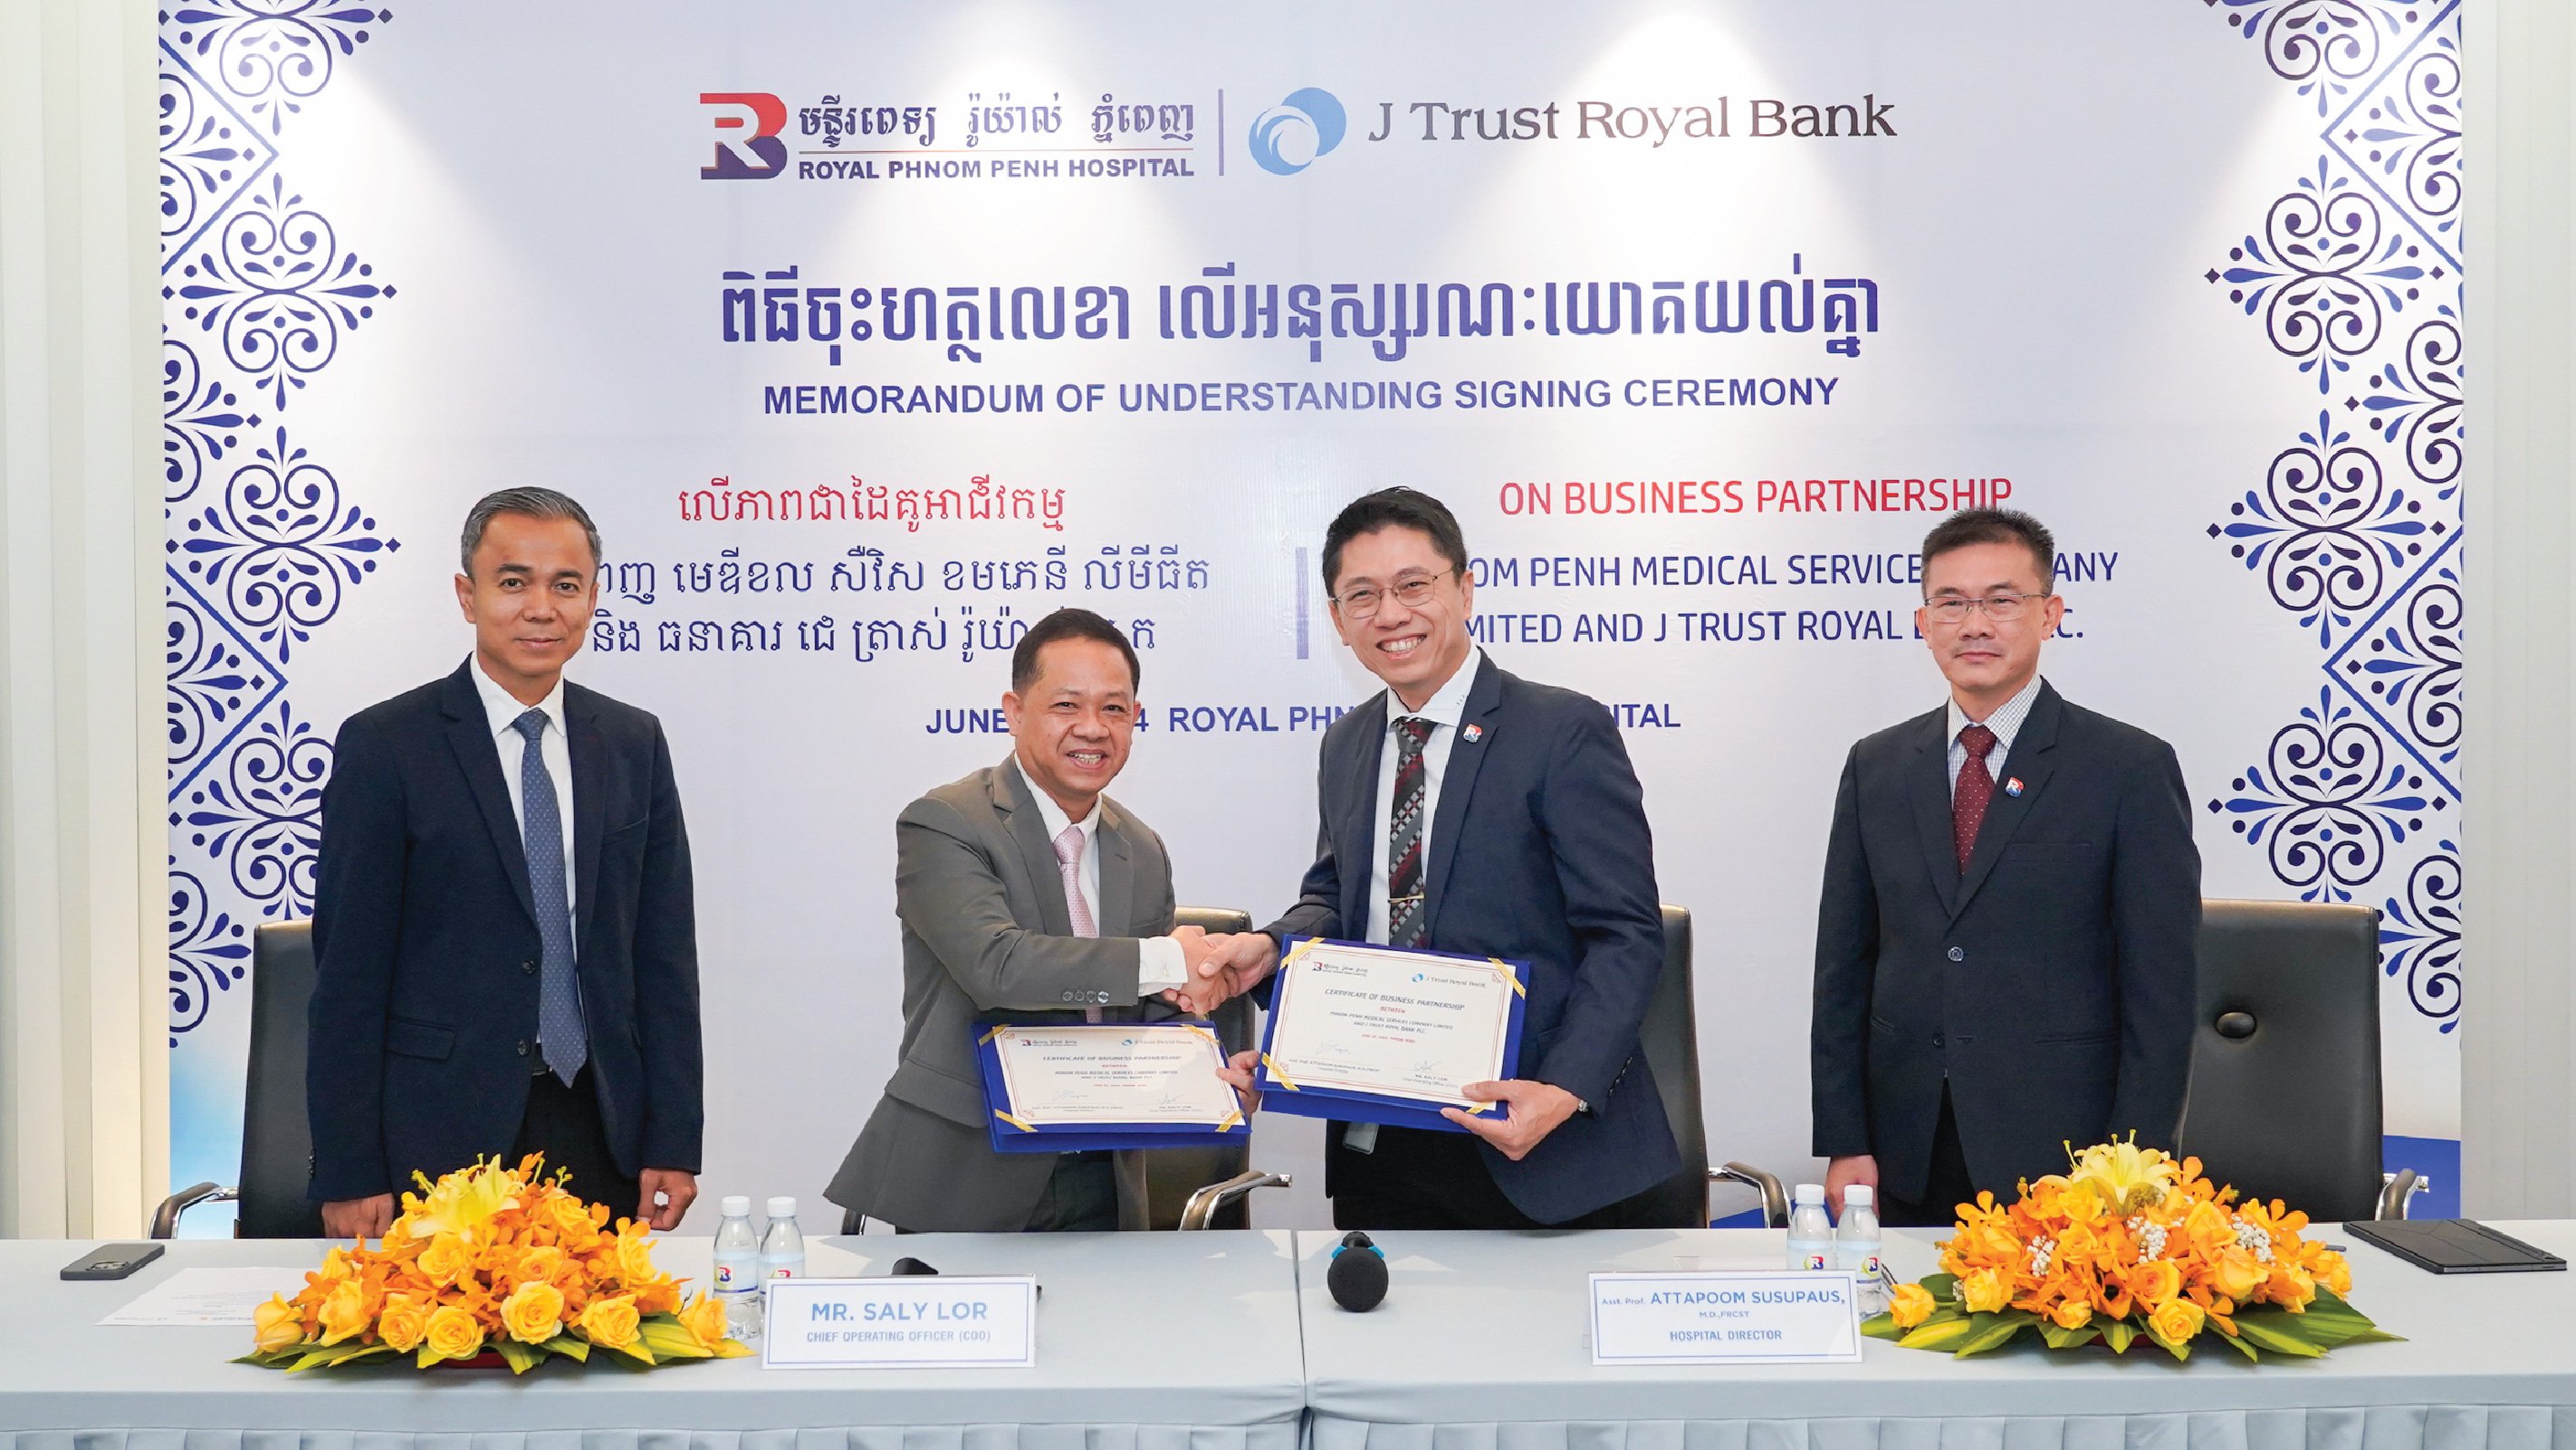 J Trust Royal Bank and Royal Phnom Penh Hospital Forge Partnership to Enhance Healthcare Services